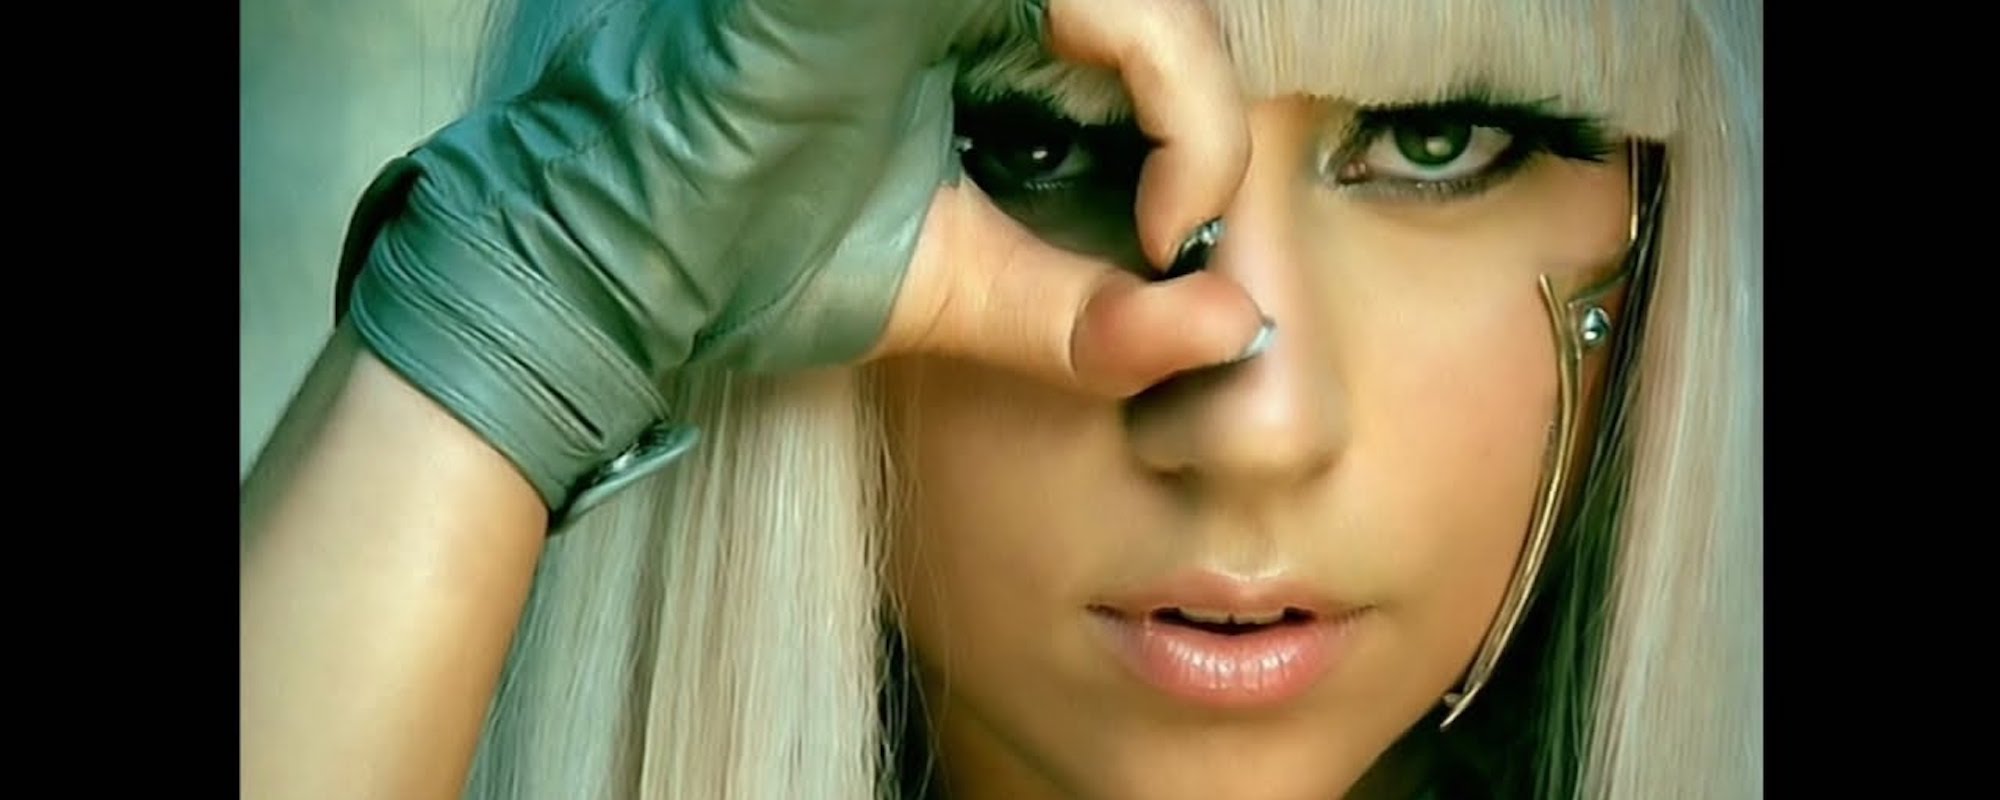 amplitude Gem Dancer The Sexual Innuendos Behind Lady Gaga's No. 1 Hit "Poker Face"